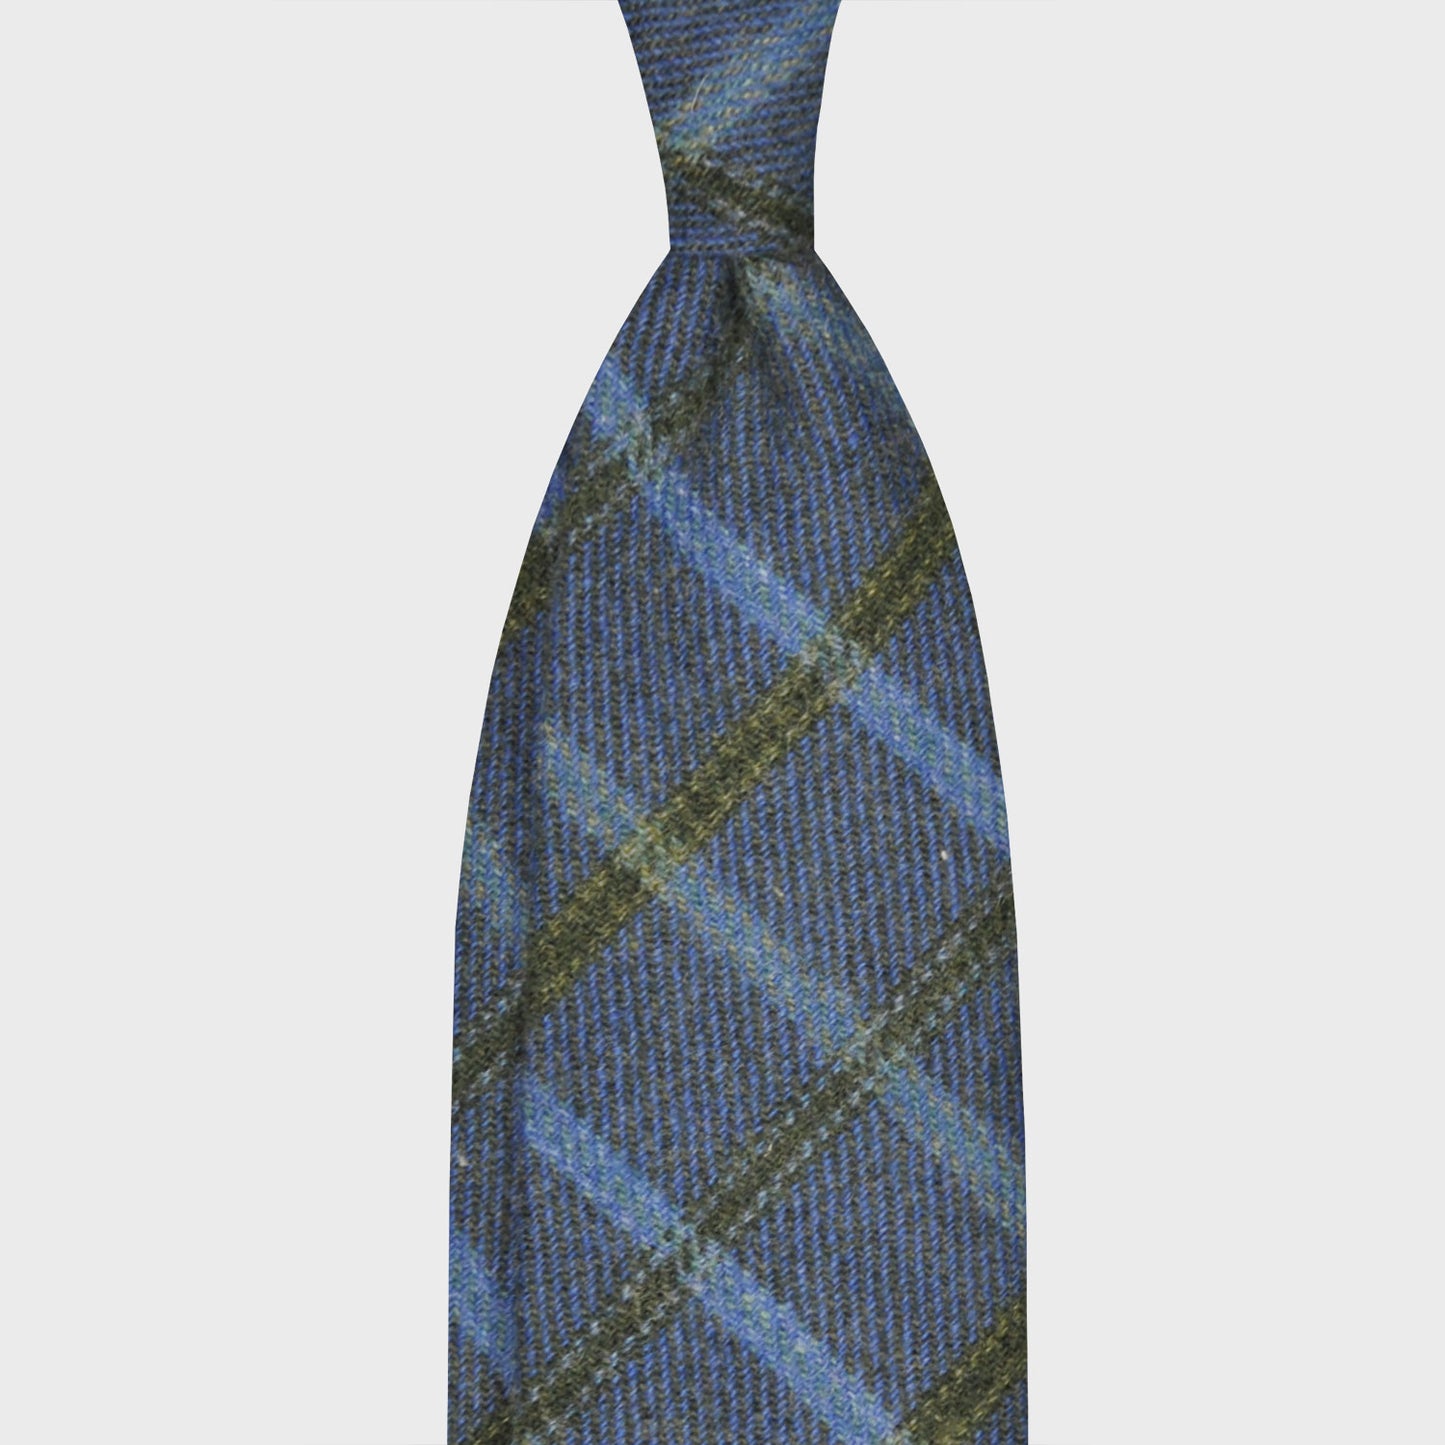 F.Marino Tweed Tie 3 Folds Windowpane Denim Blue-Wools Boutique Uomo